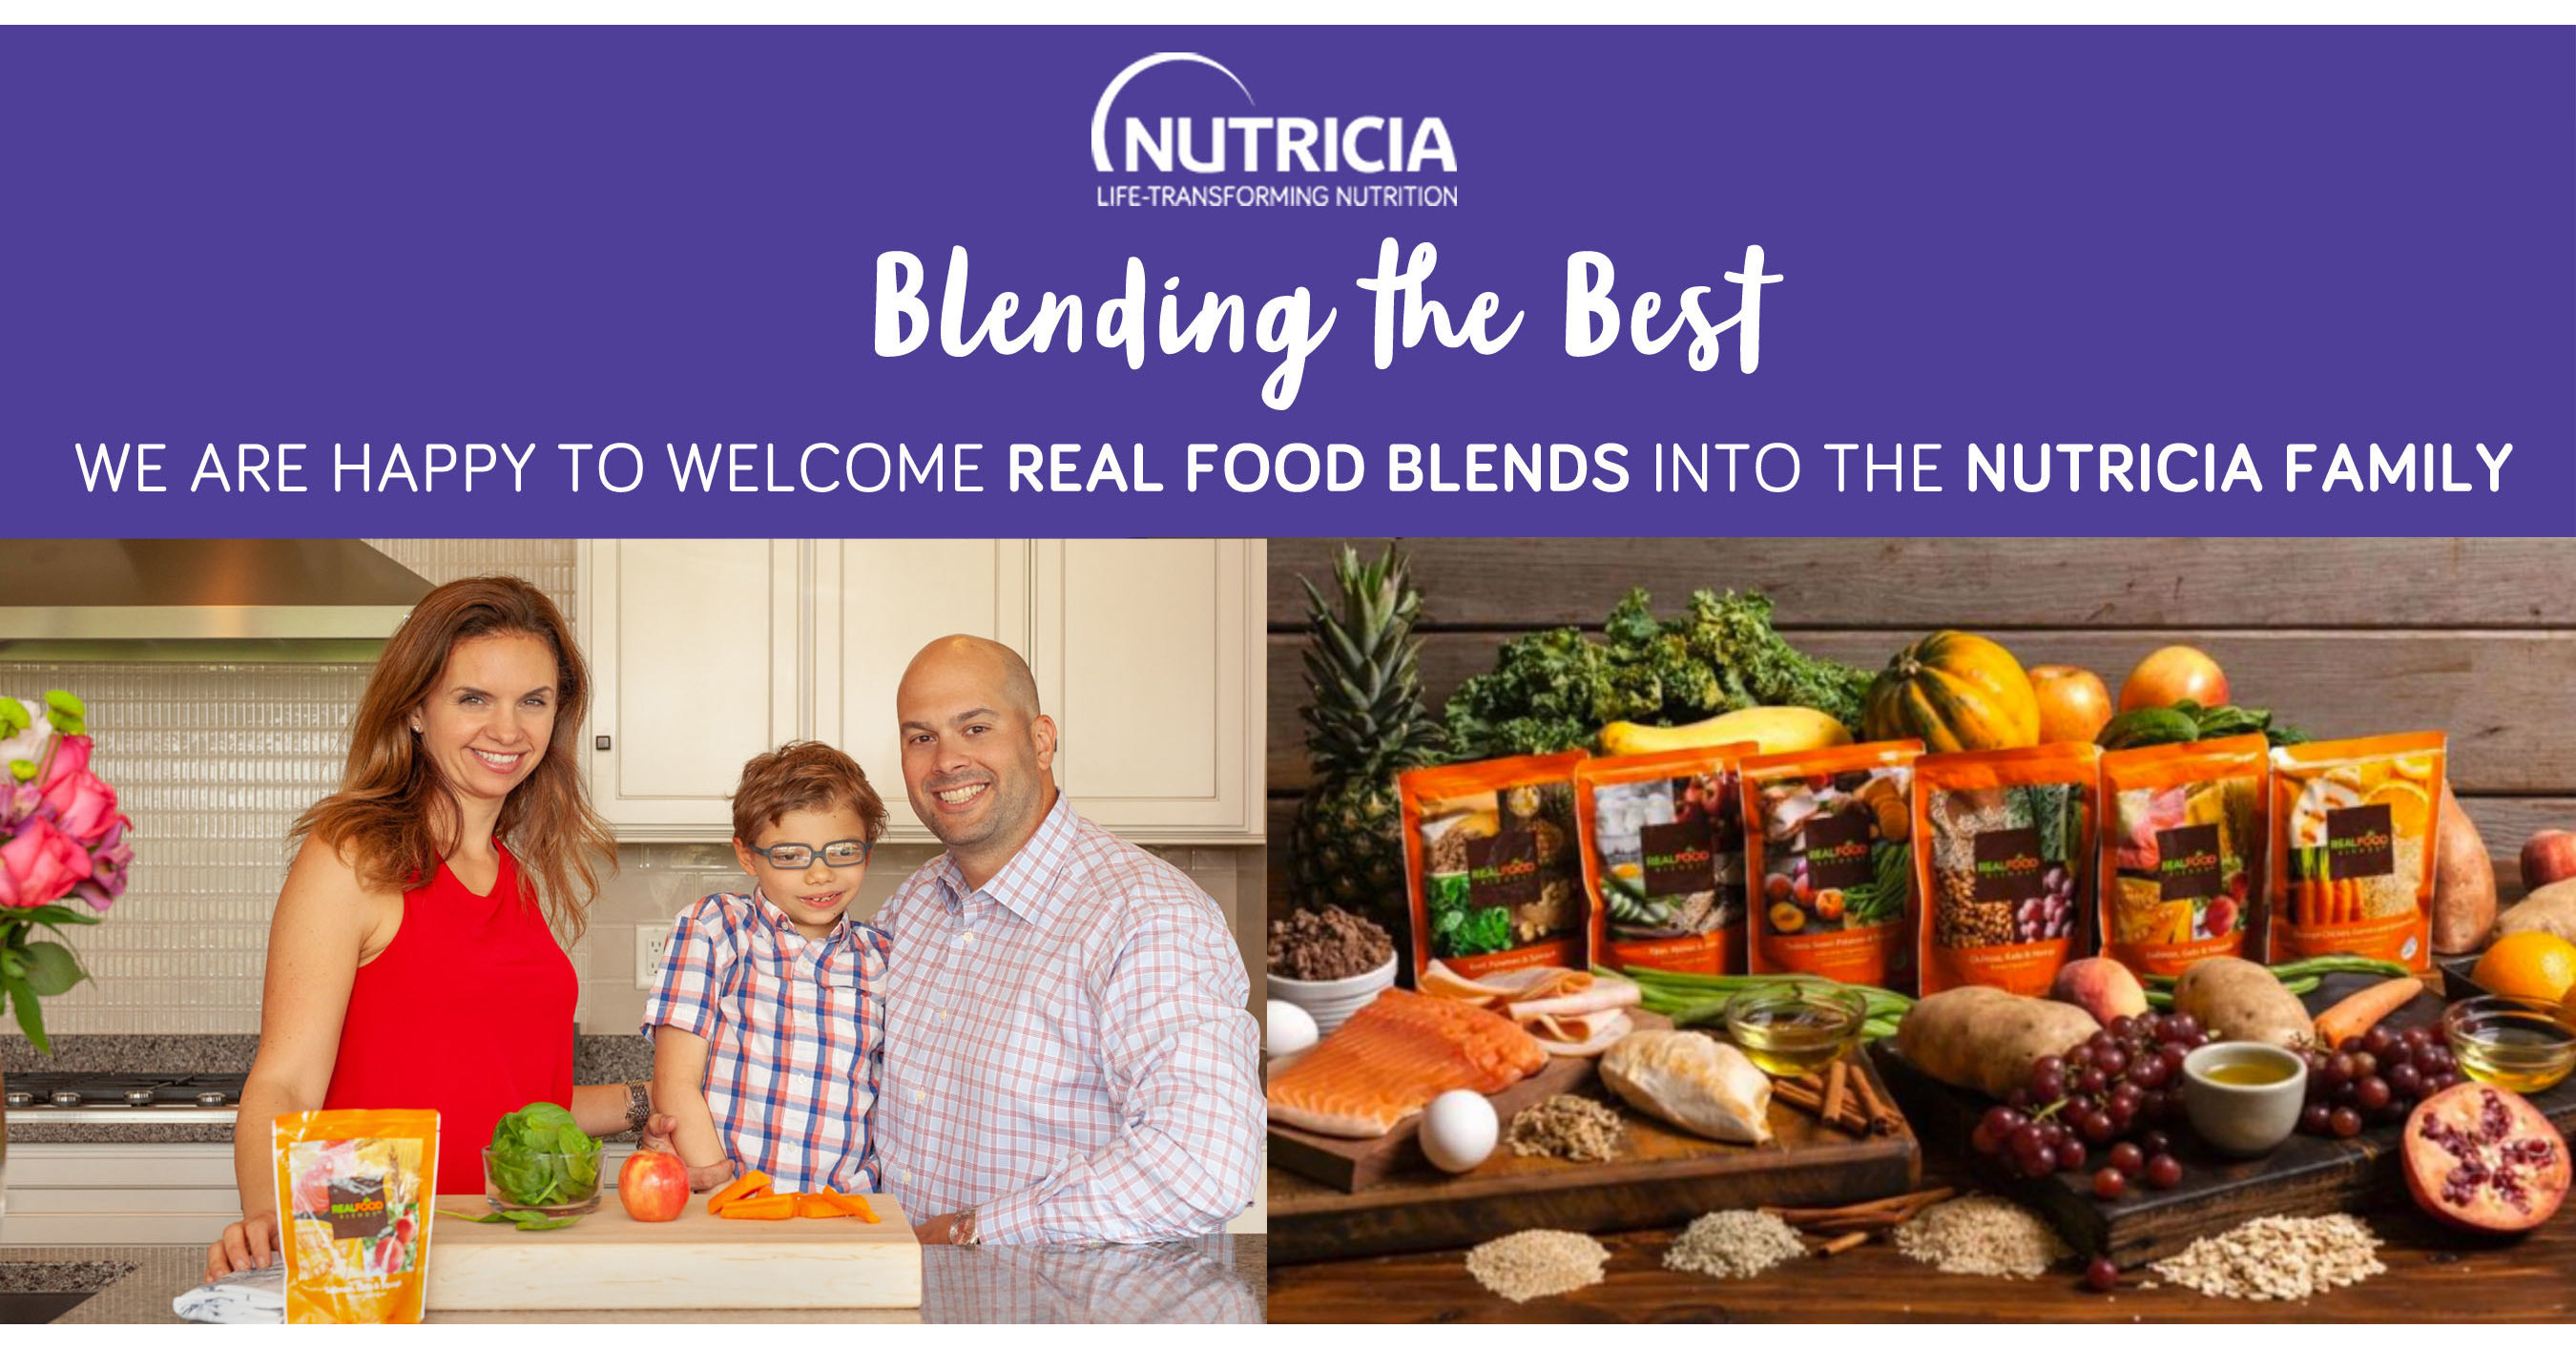 https://mma.prnewswire.com/media/1317442/Nutricia_acquires_RFB.jpg?p=facebook